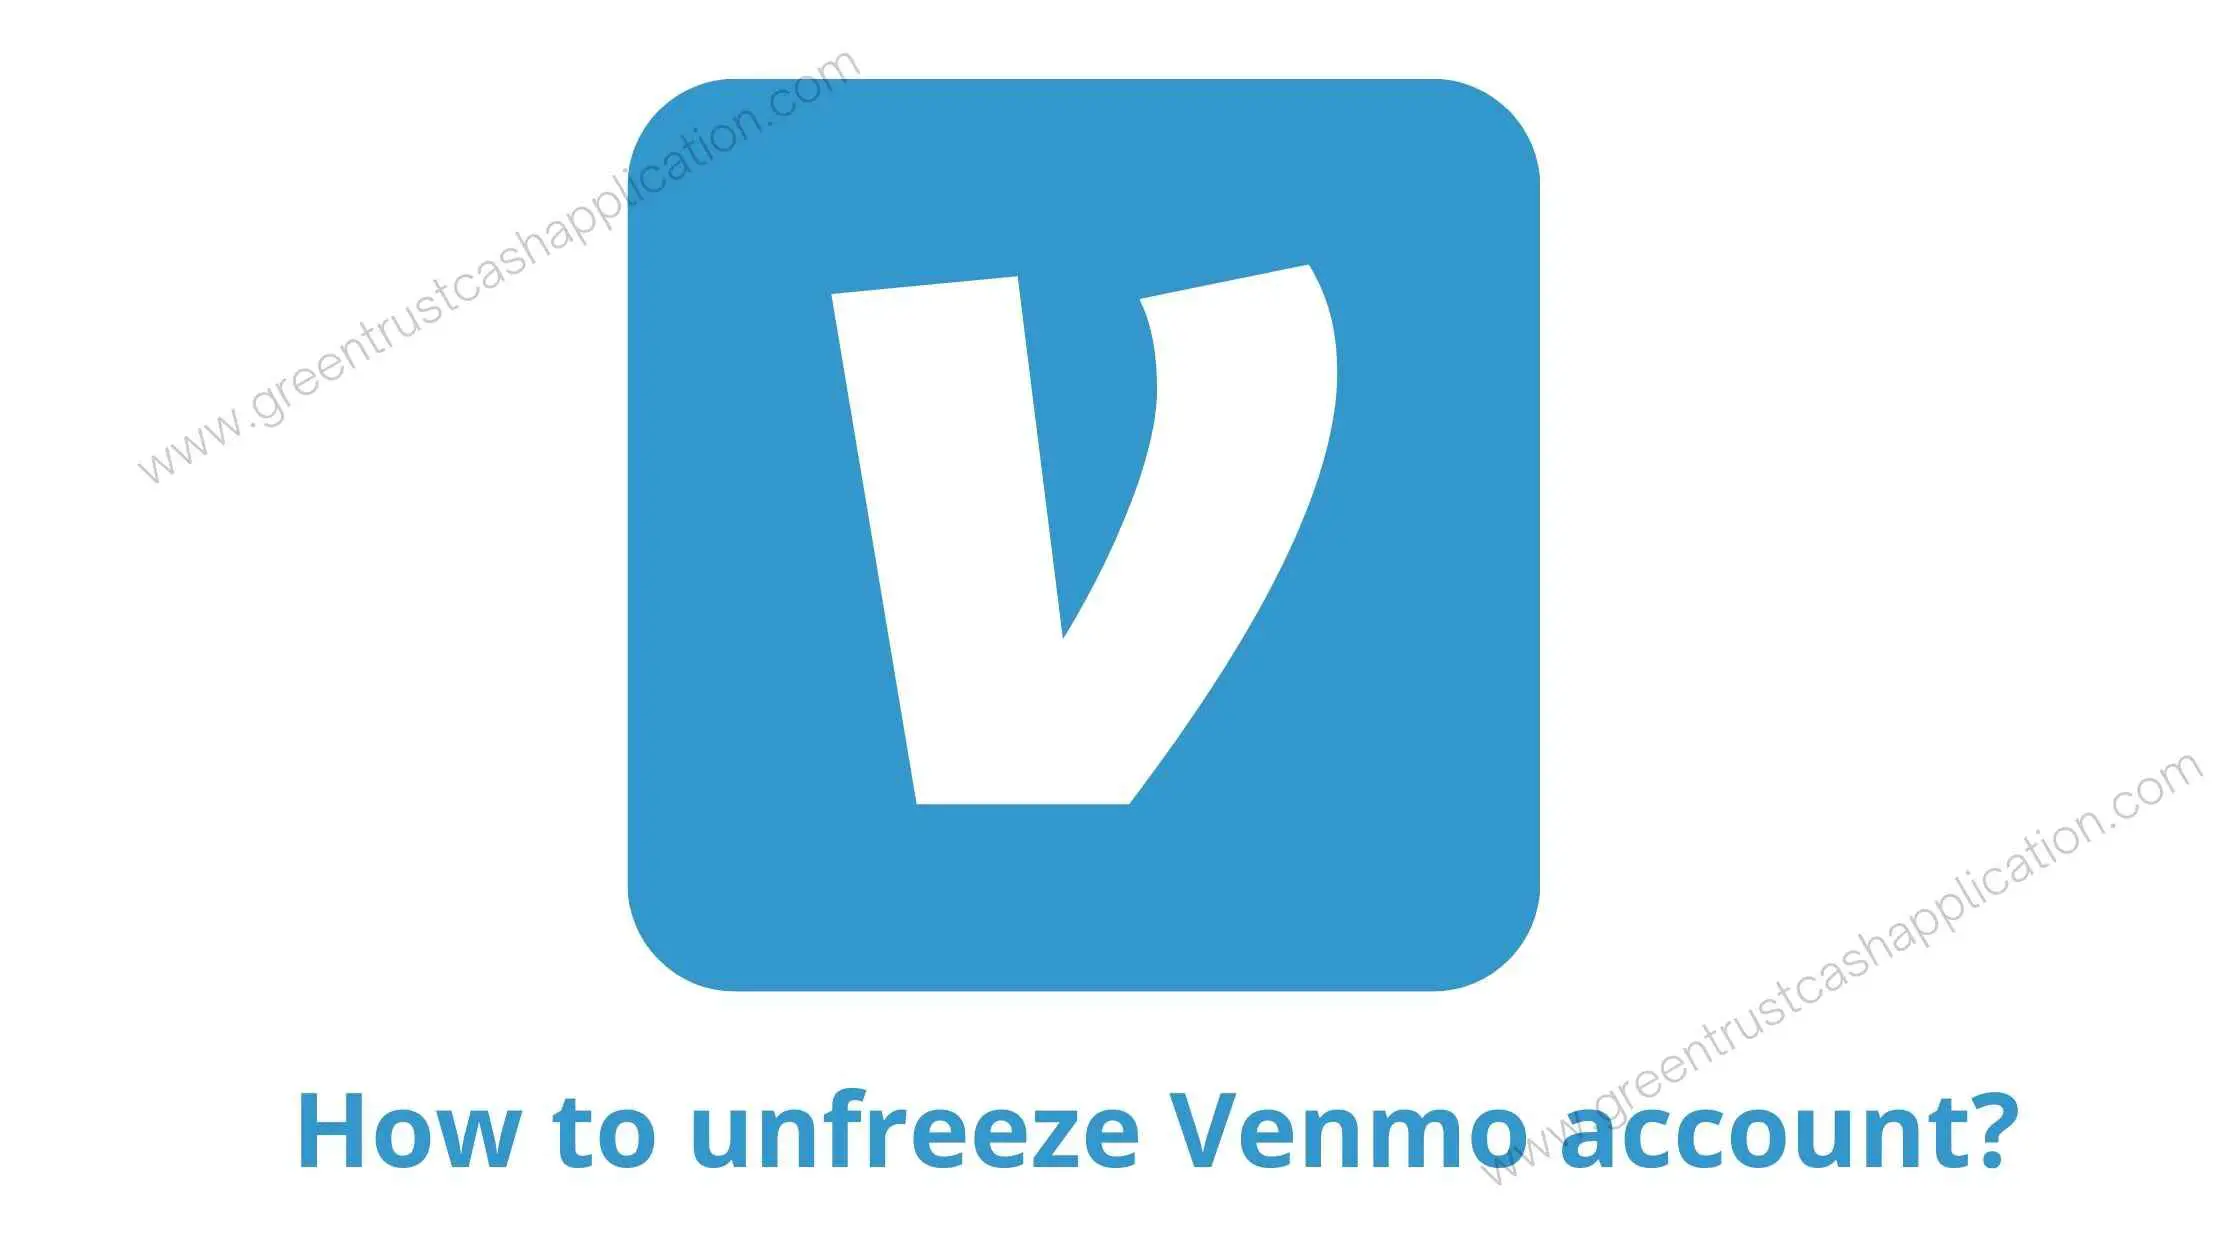 How do I unfreeze my Venmo account suddenly?